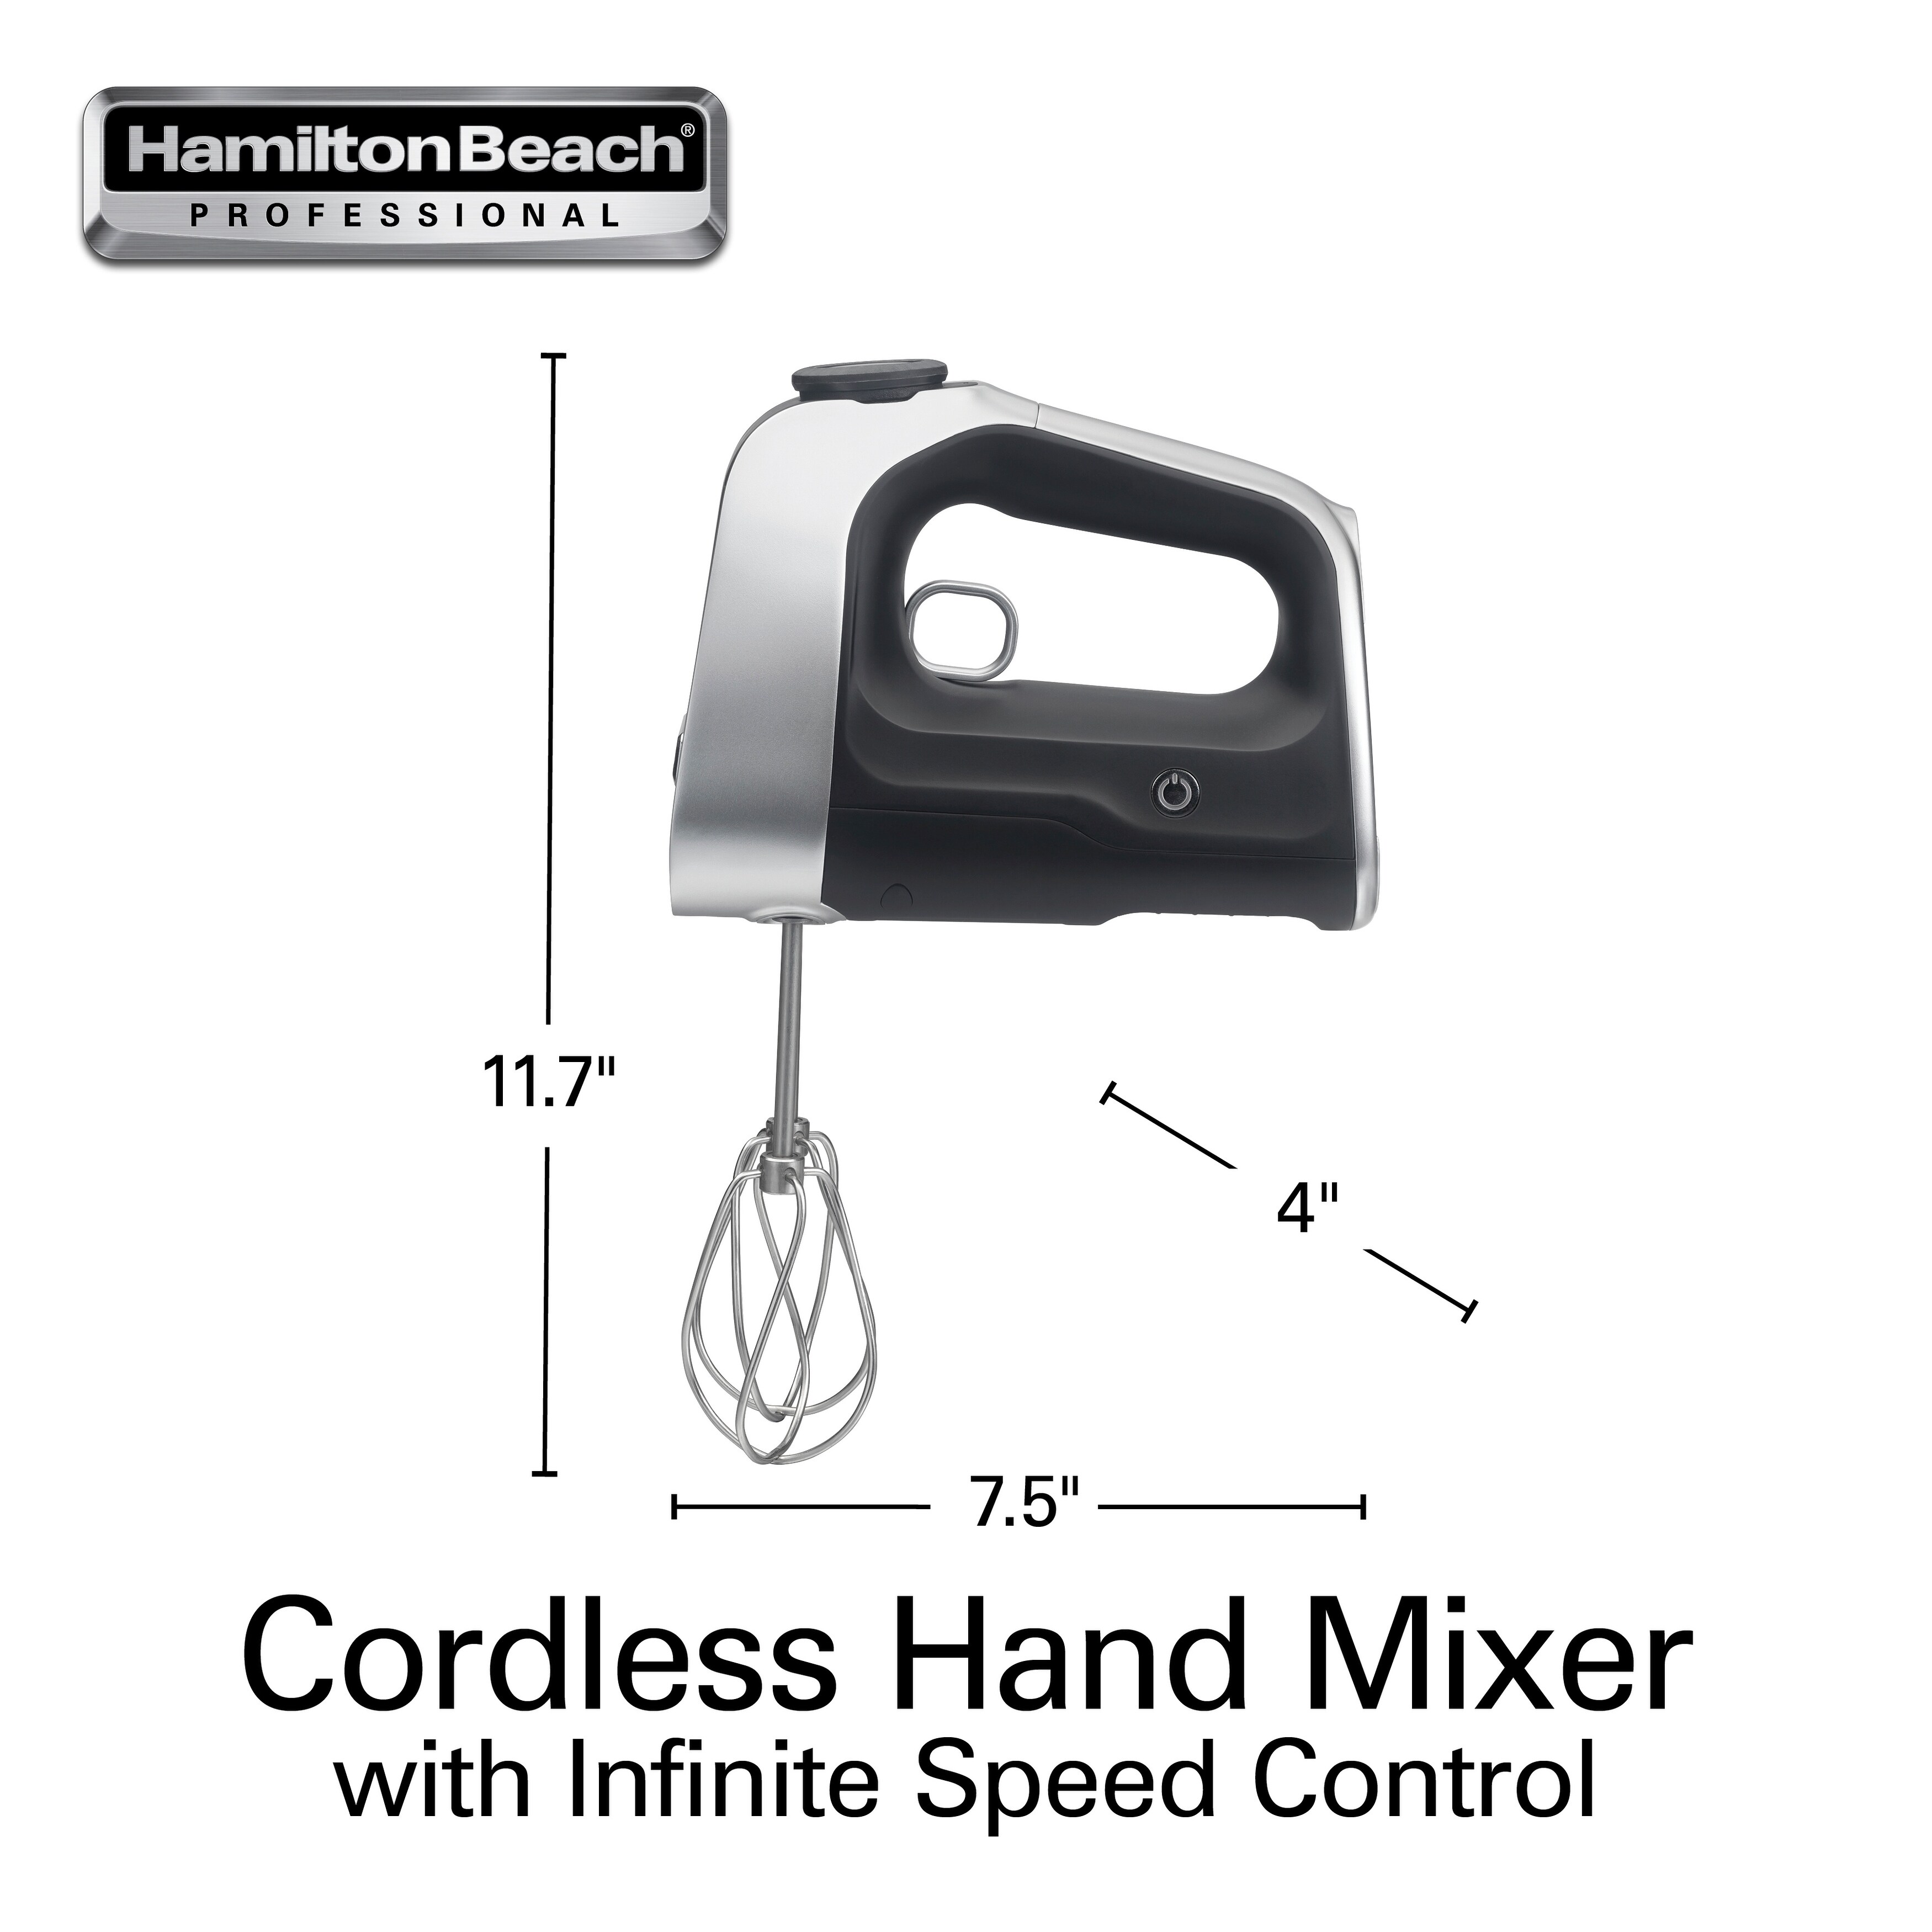 Hamilton Beach Professional Cordless Hand Mixer With Infinite